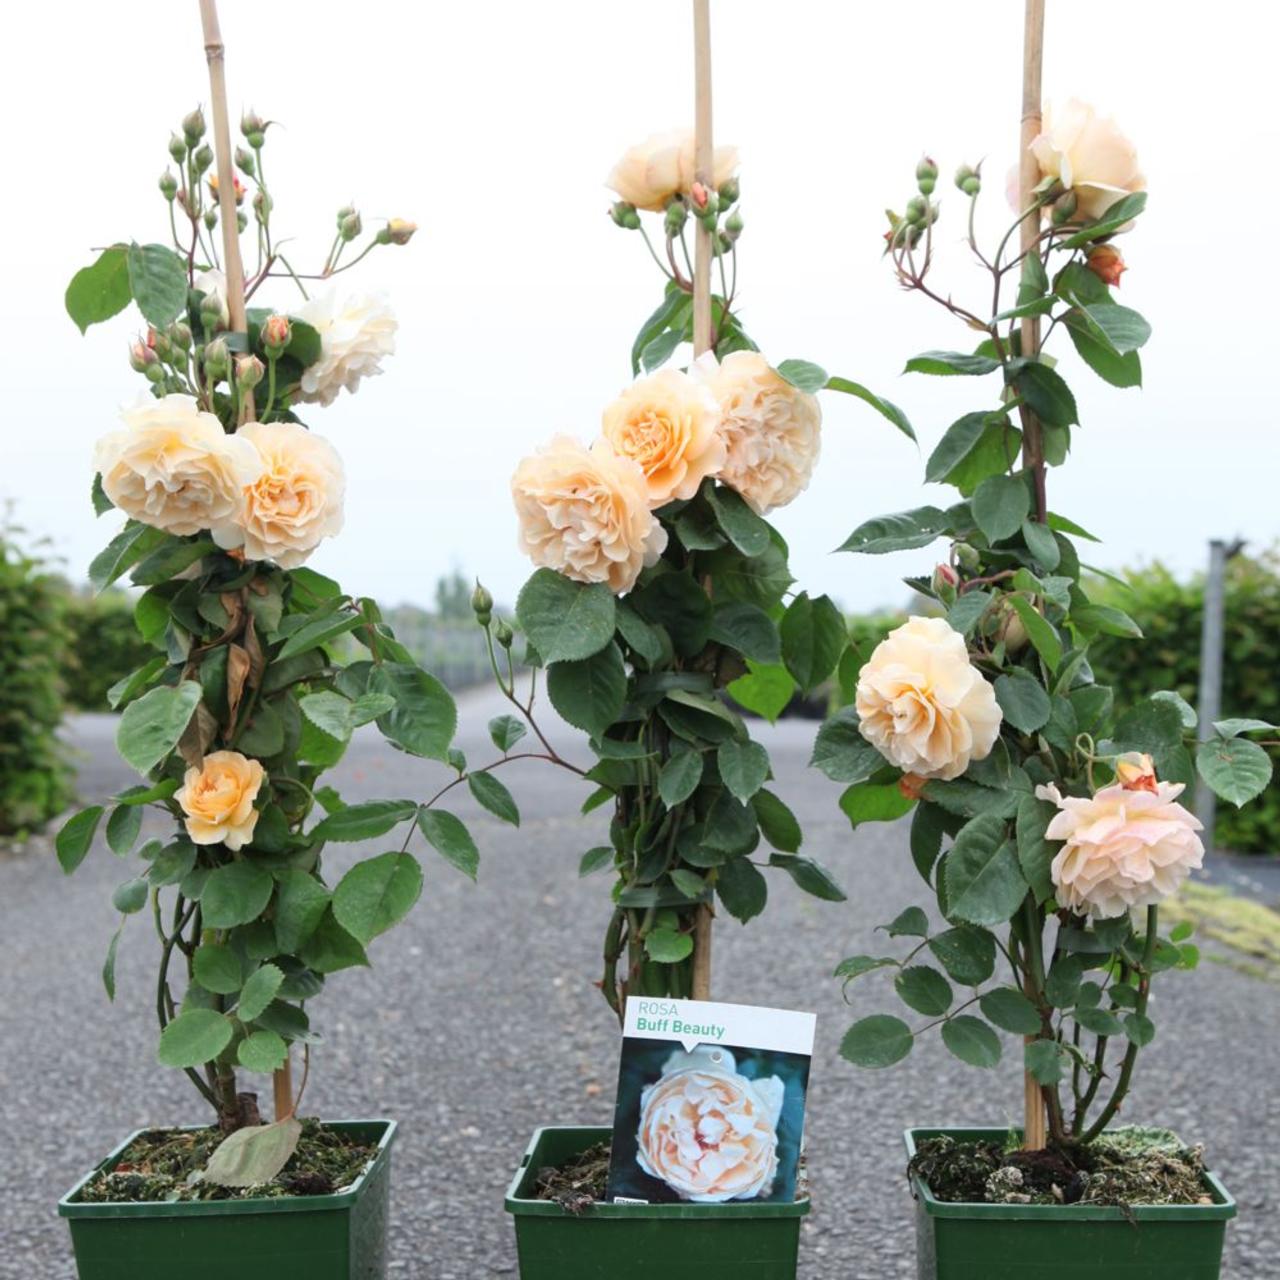 Rosa 'Buff Beauty' plant